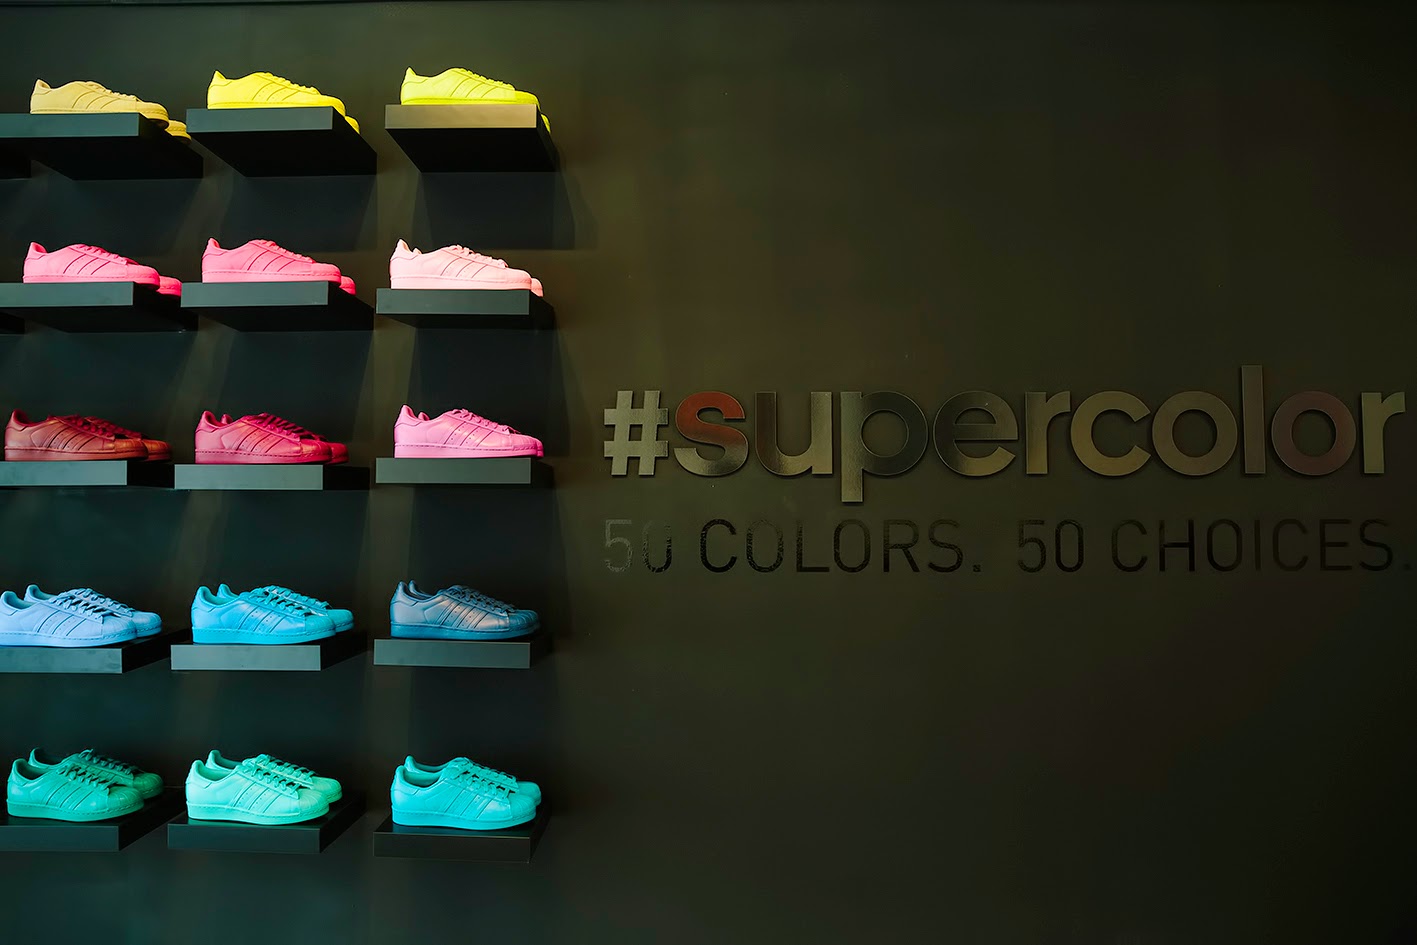 Eniwhere Fashion - Adidas Superstar vs Adidas Supercolor